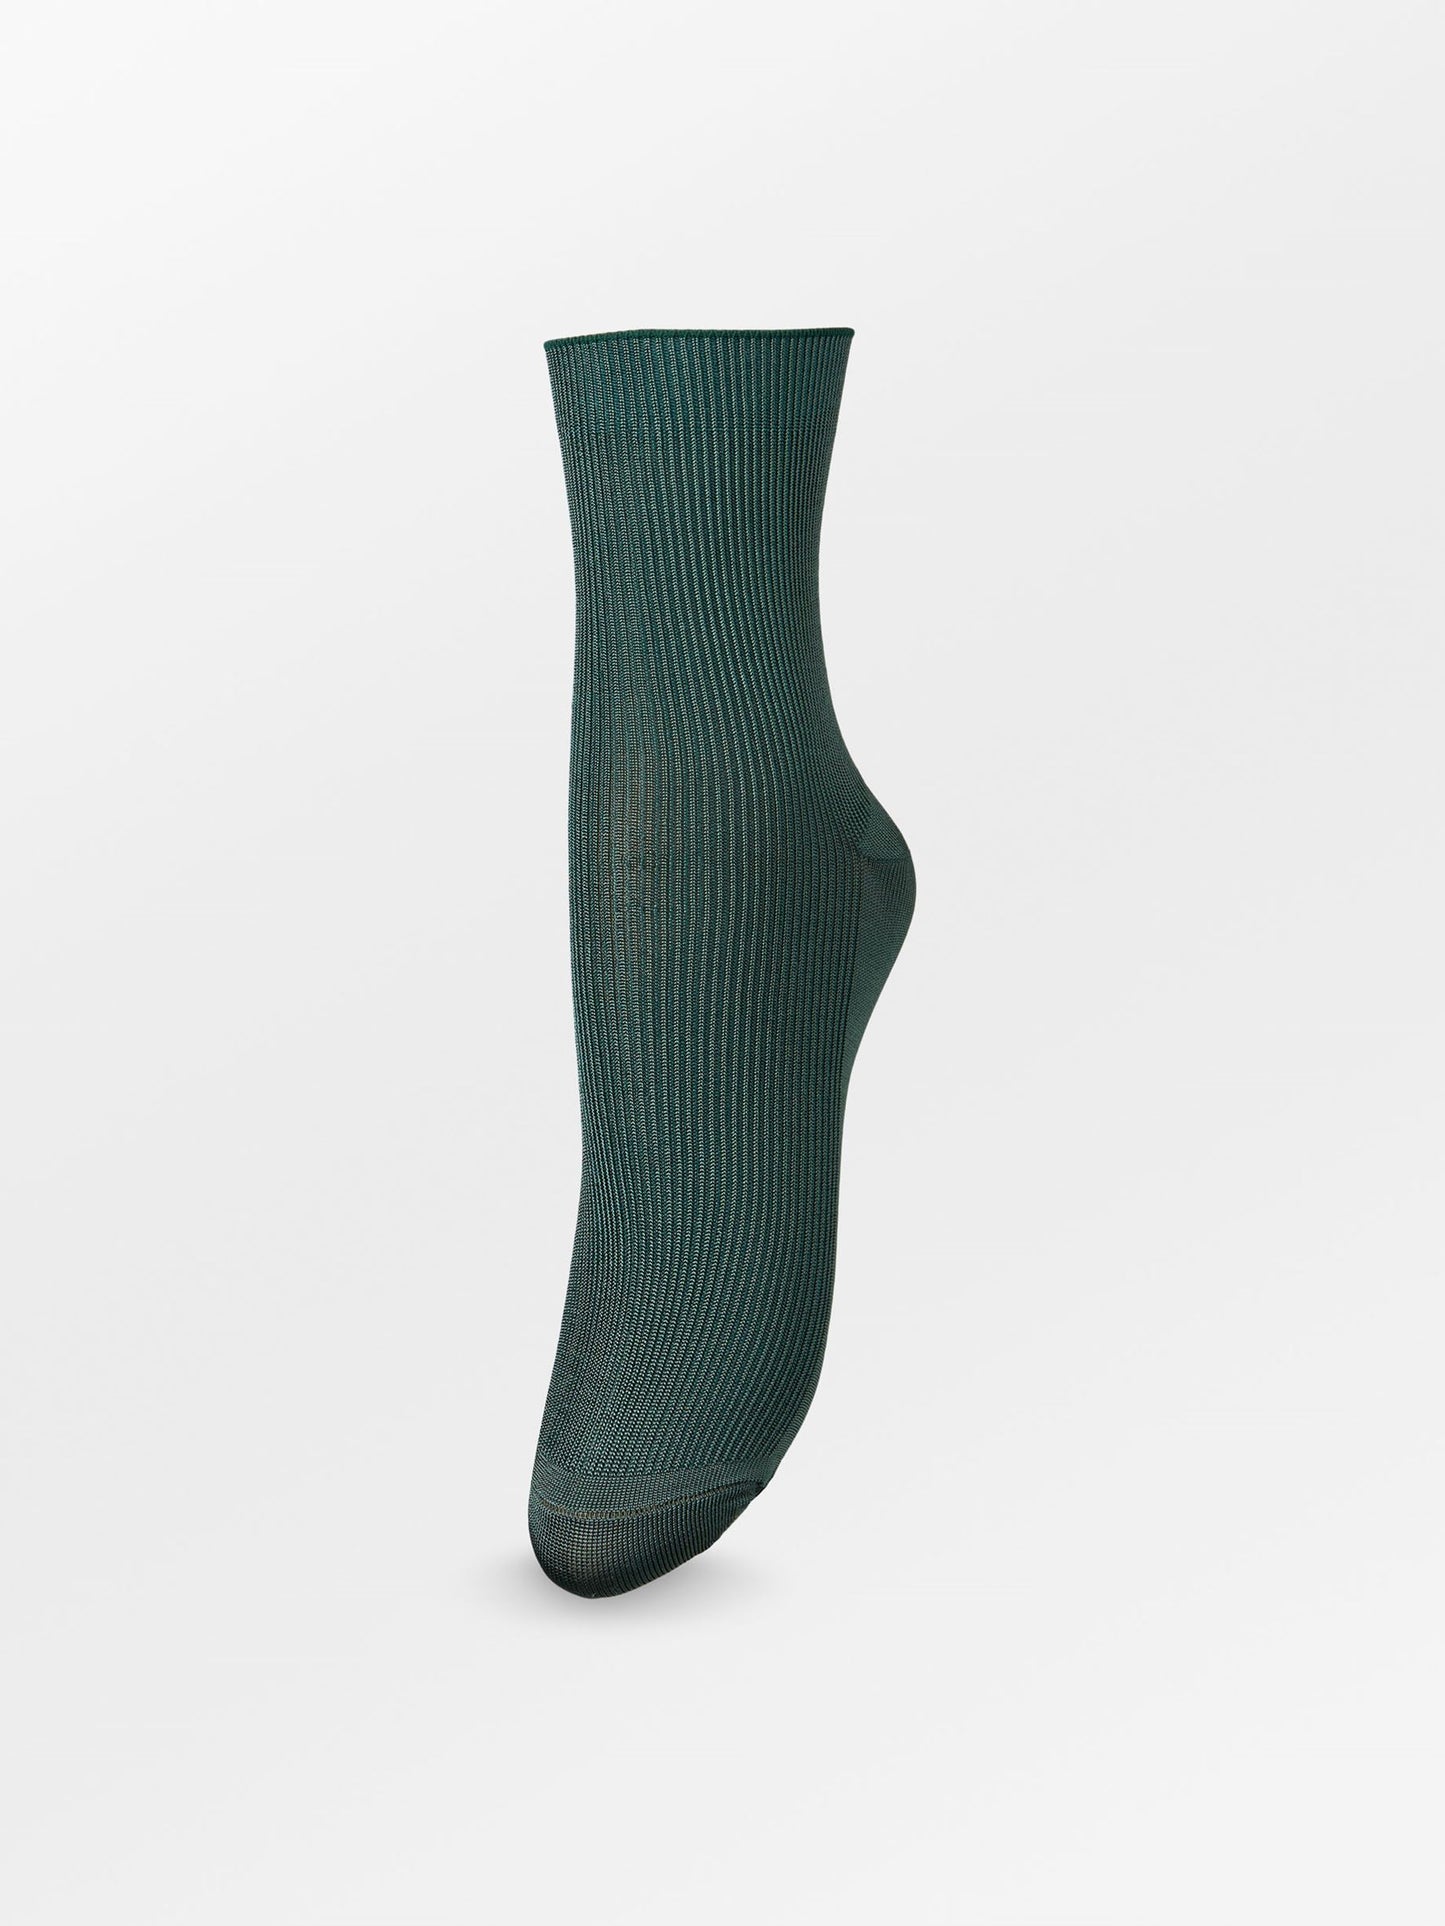 Becksöndergaard, Alma Solid Sock - Green, socks, archive, archive, sale, sale, socks